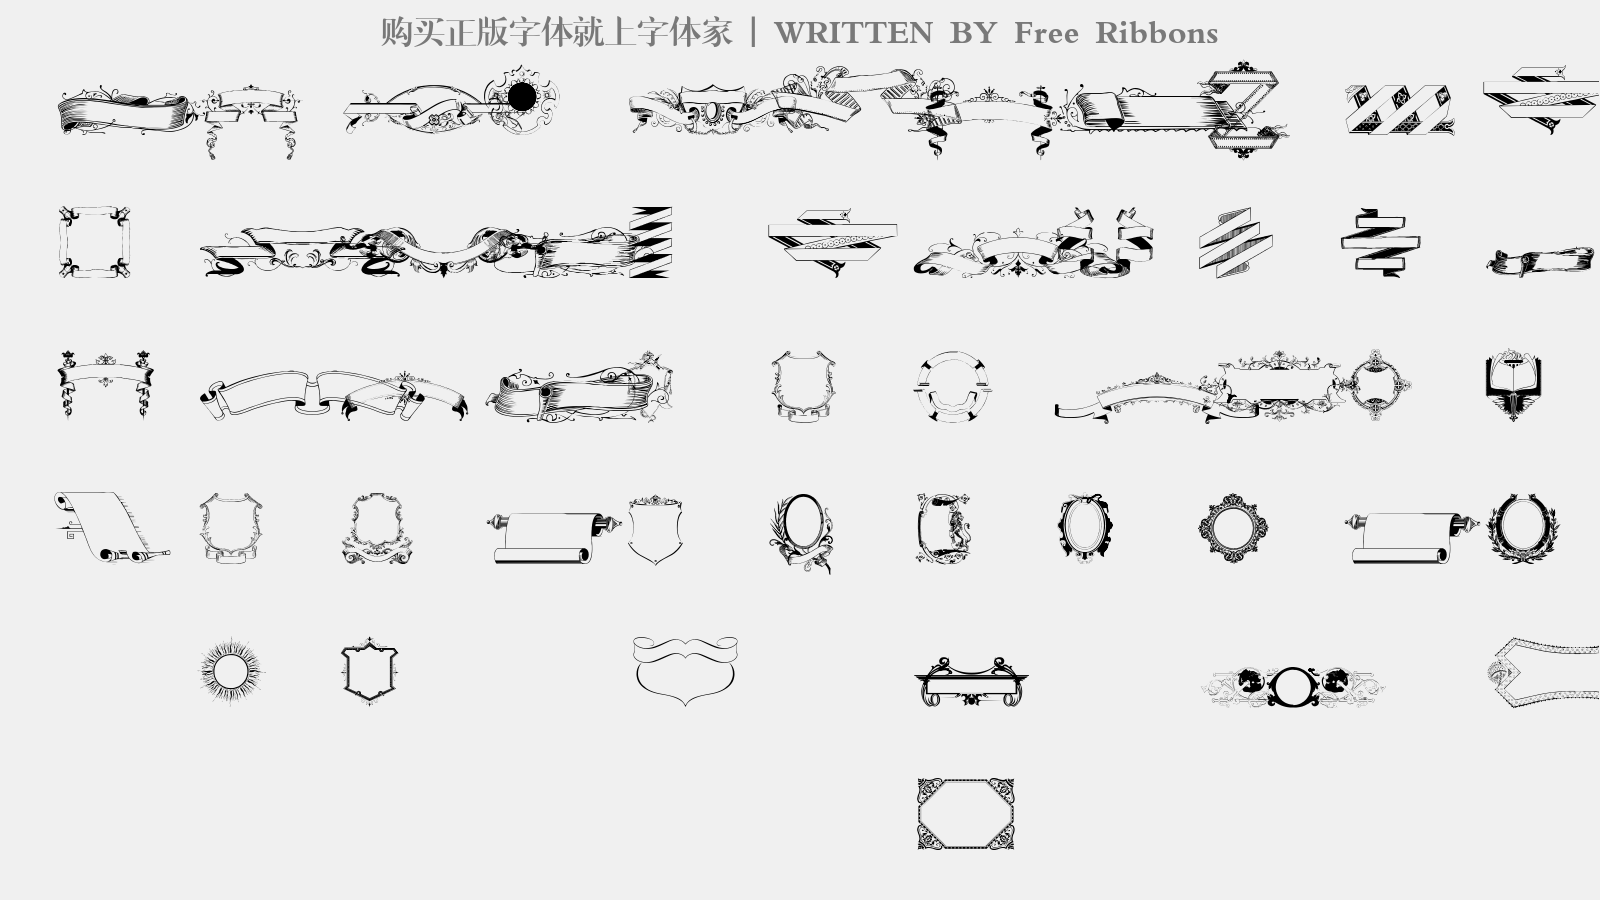 Free Ribbons - 大写字母/小写字母/数字